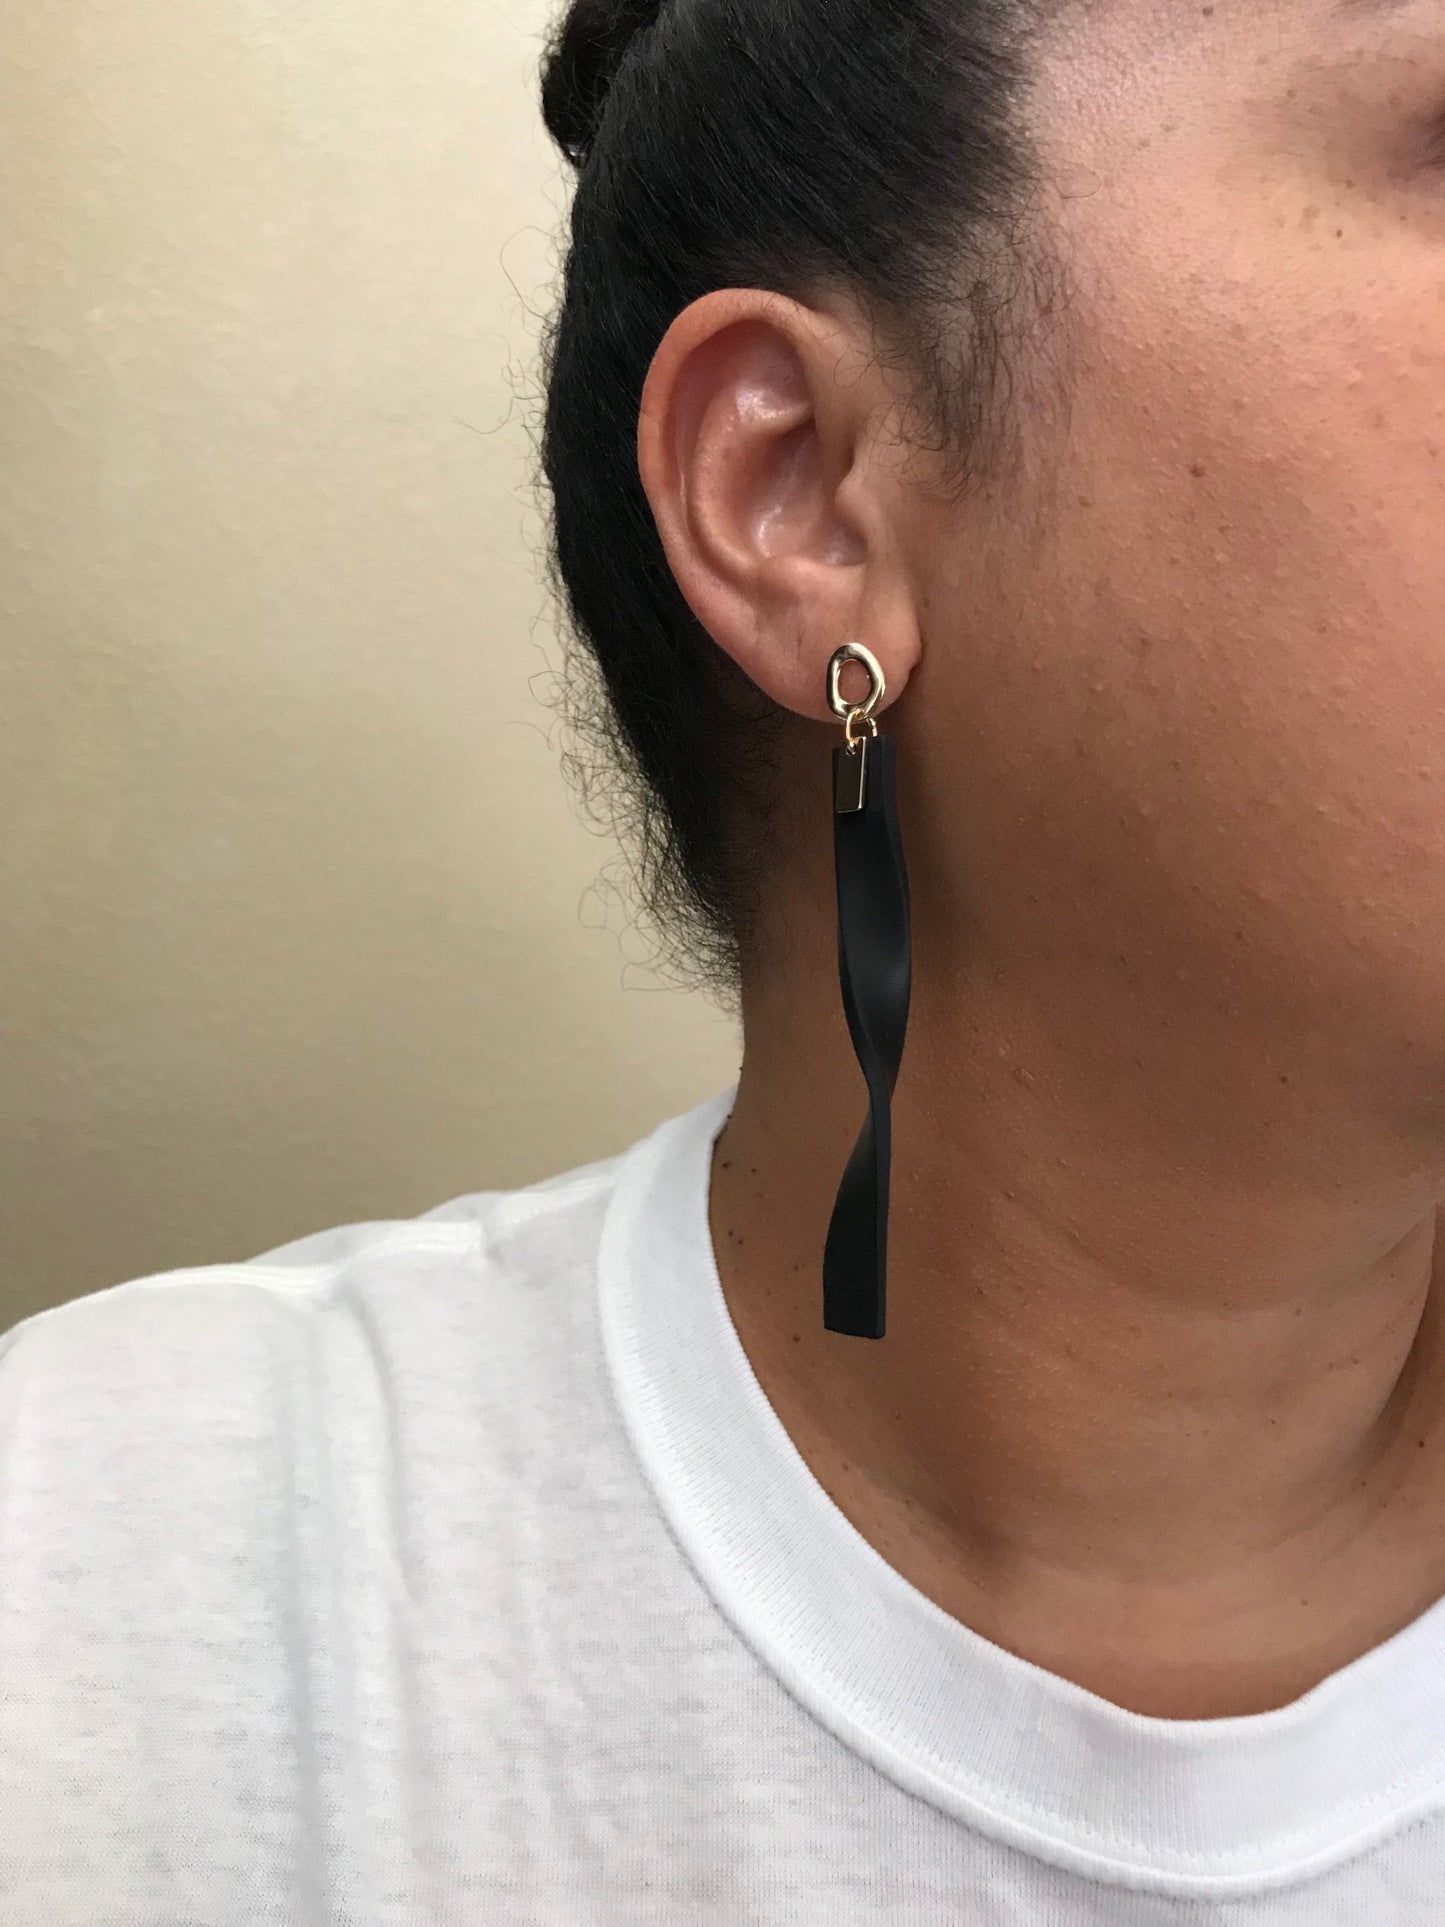 Black out earrings